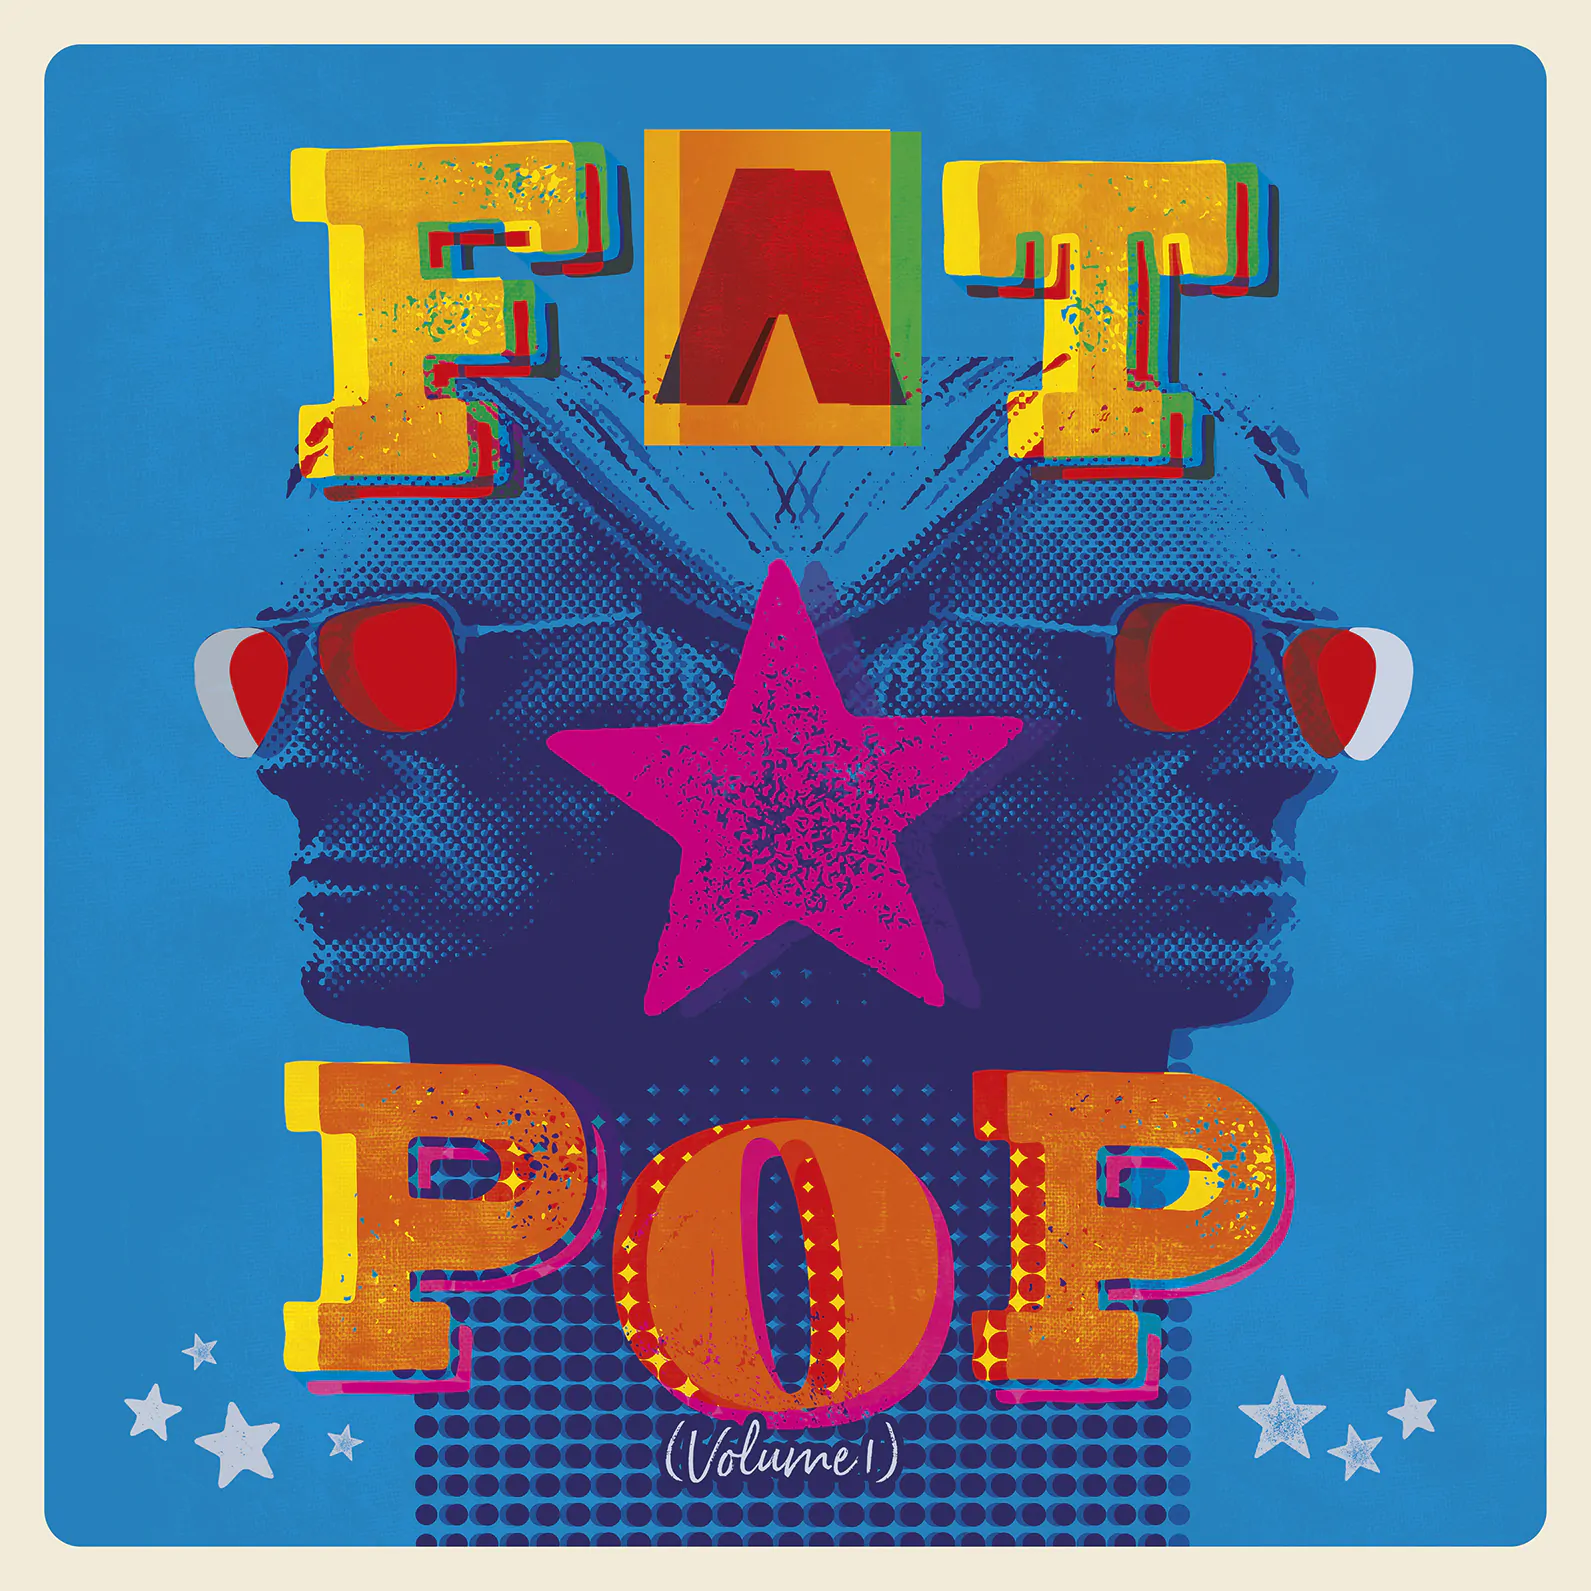 ALBUM REVIEW: Paul Weller – Fat Pop Vol 1